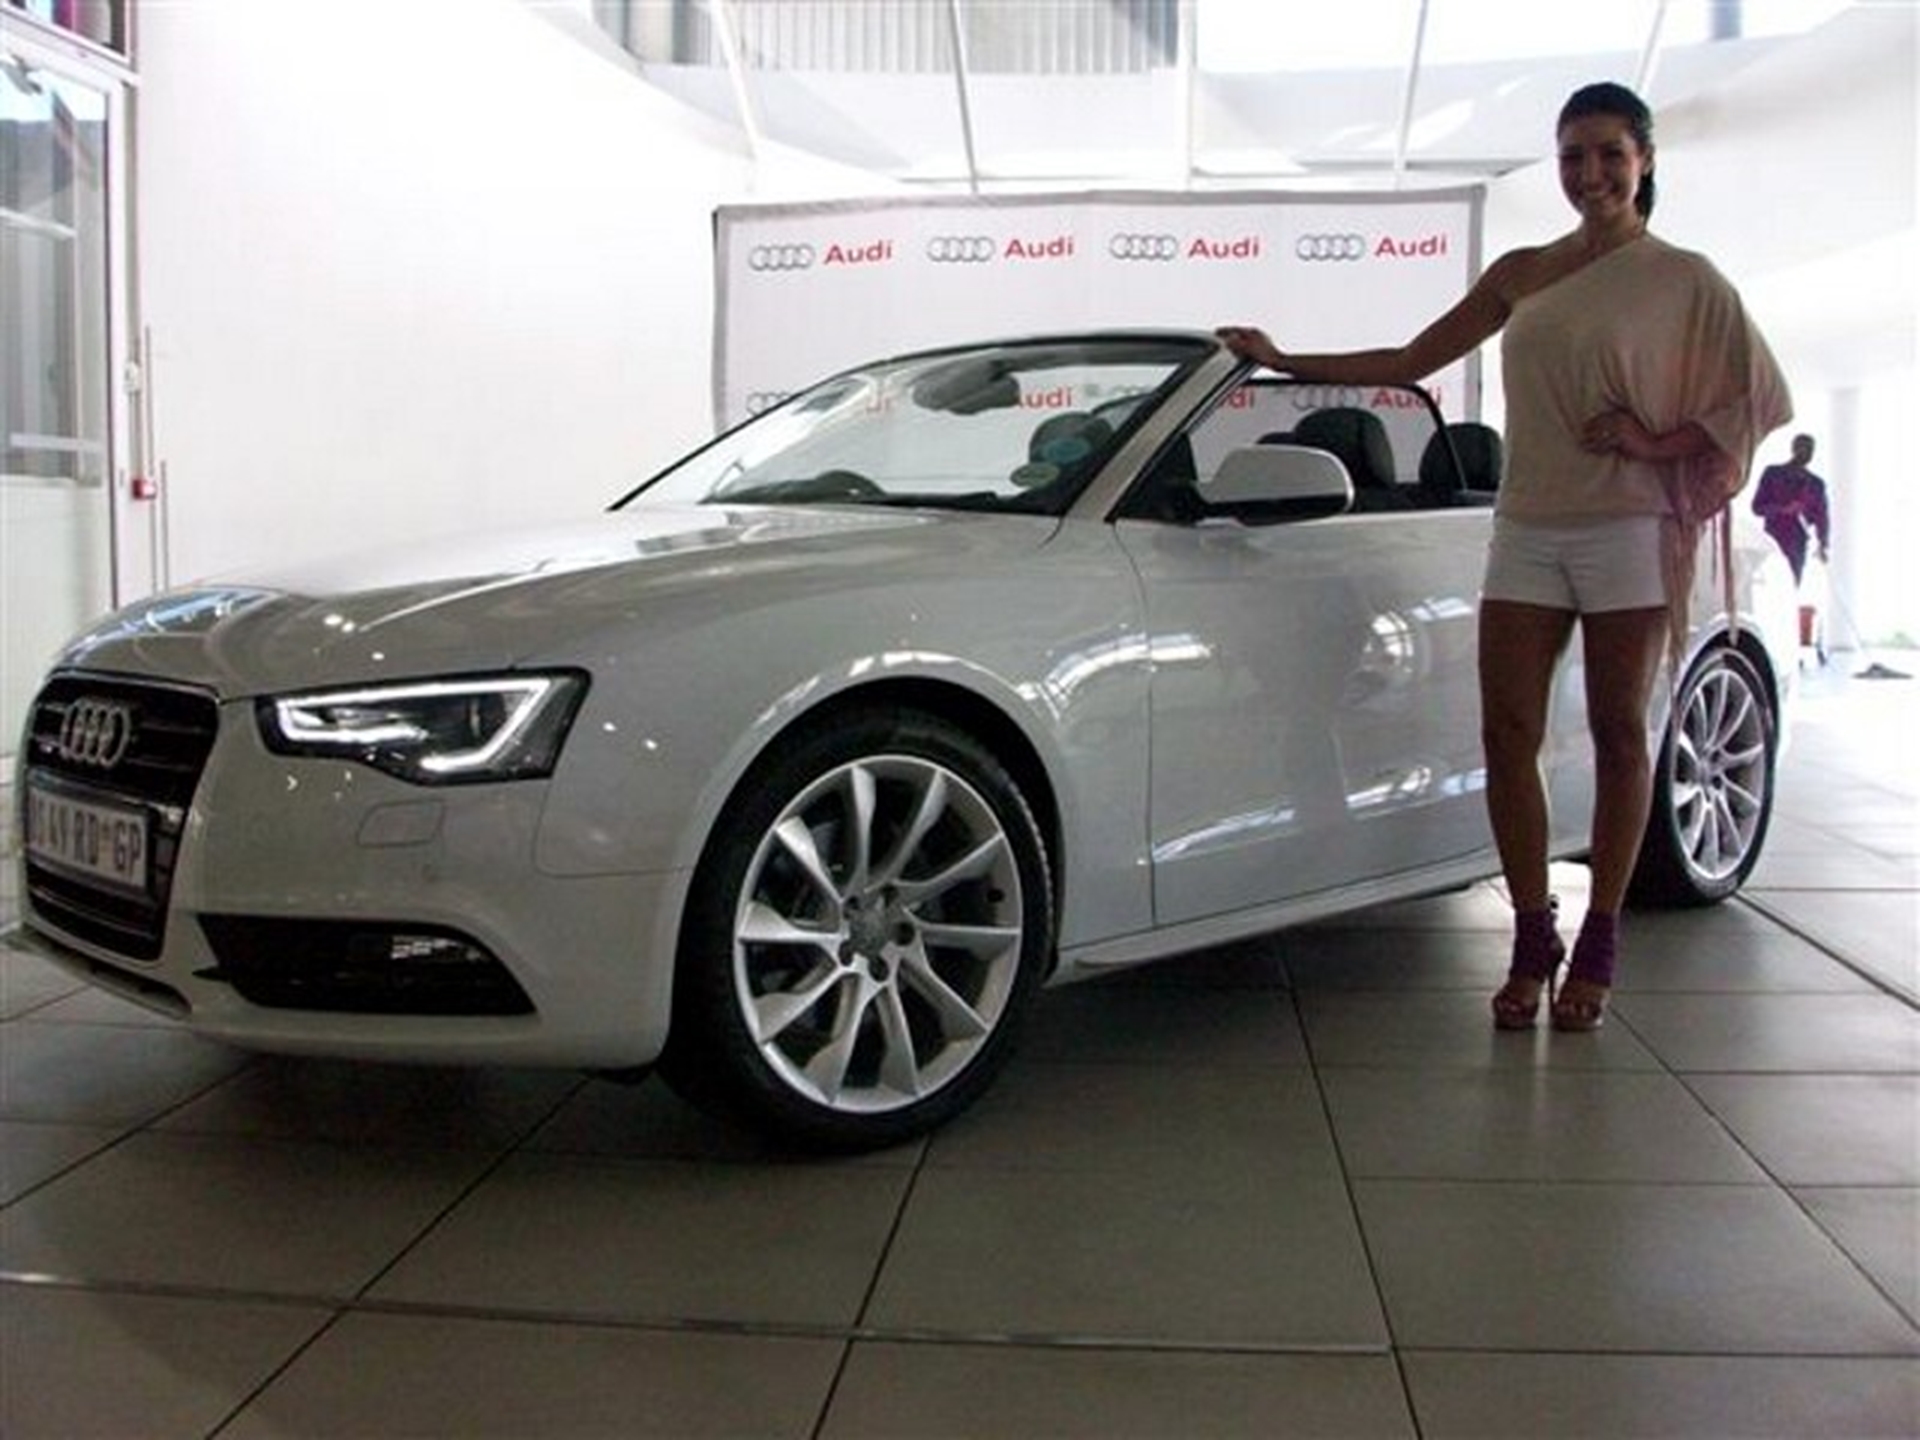 Audi Brand Ambassadors: Cameron van der Burg and Jeannie D